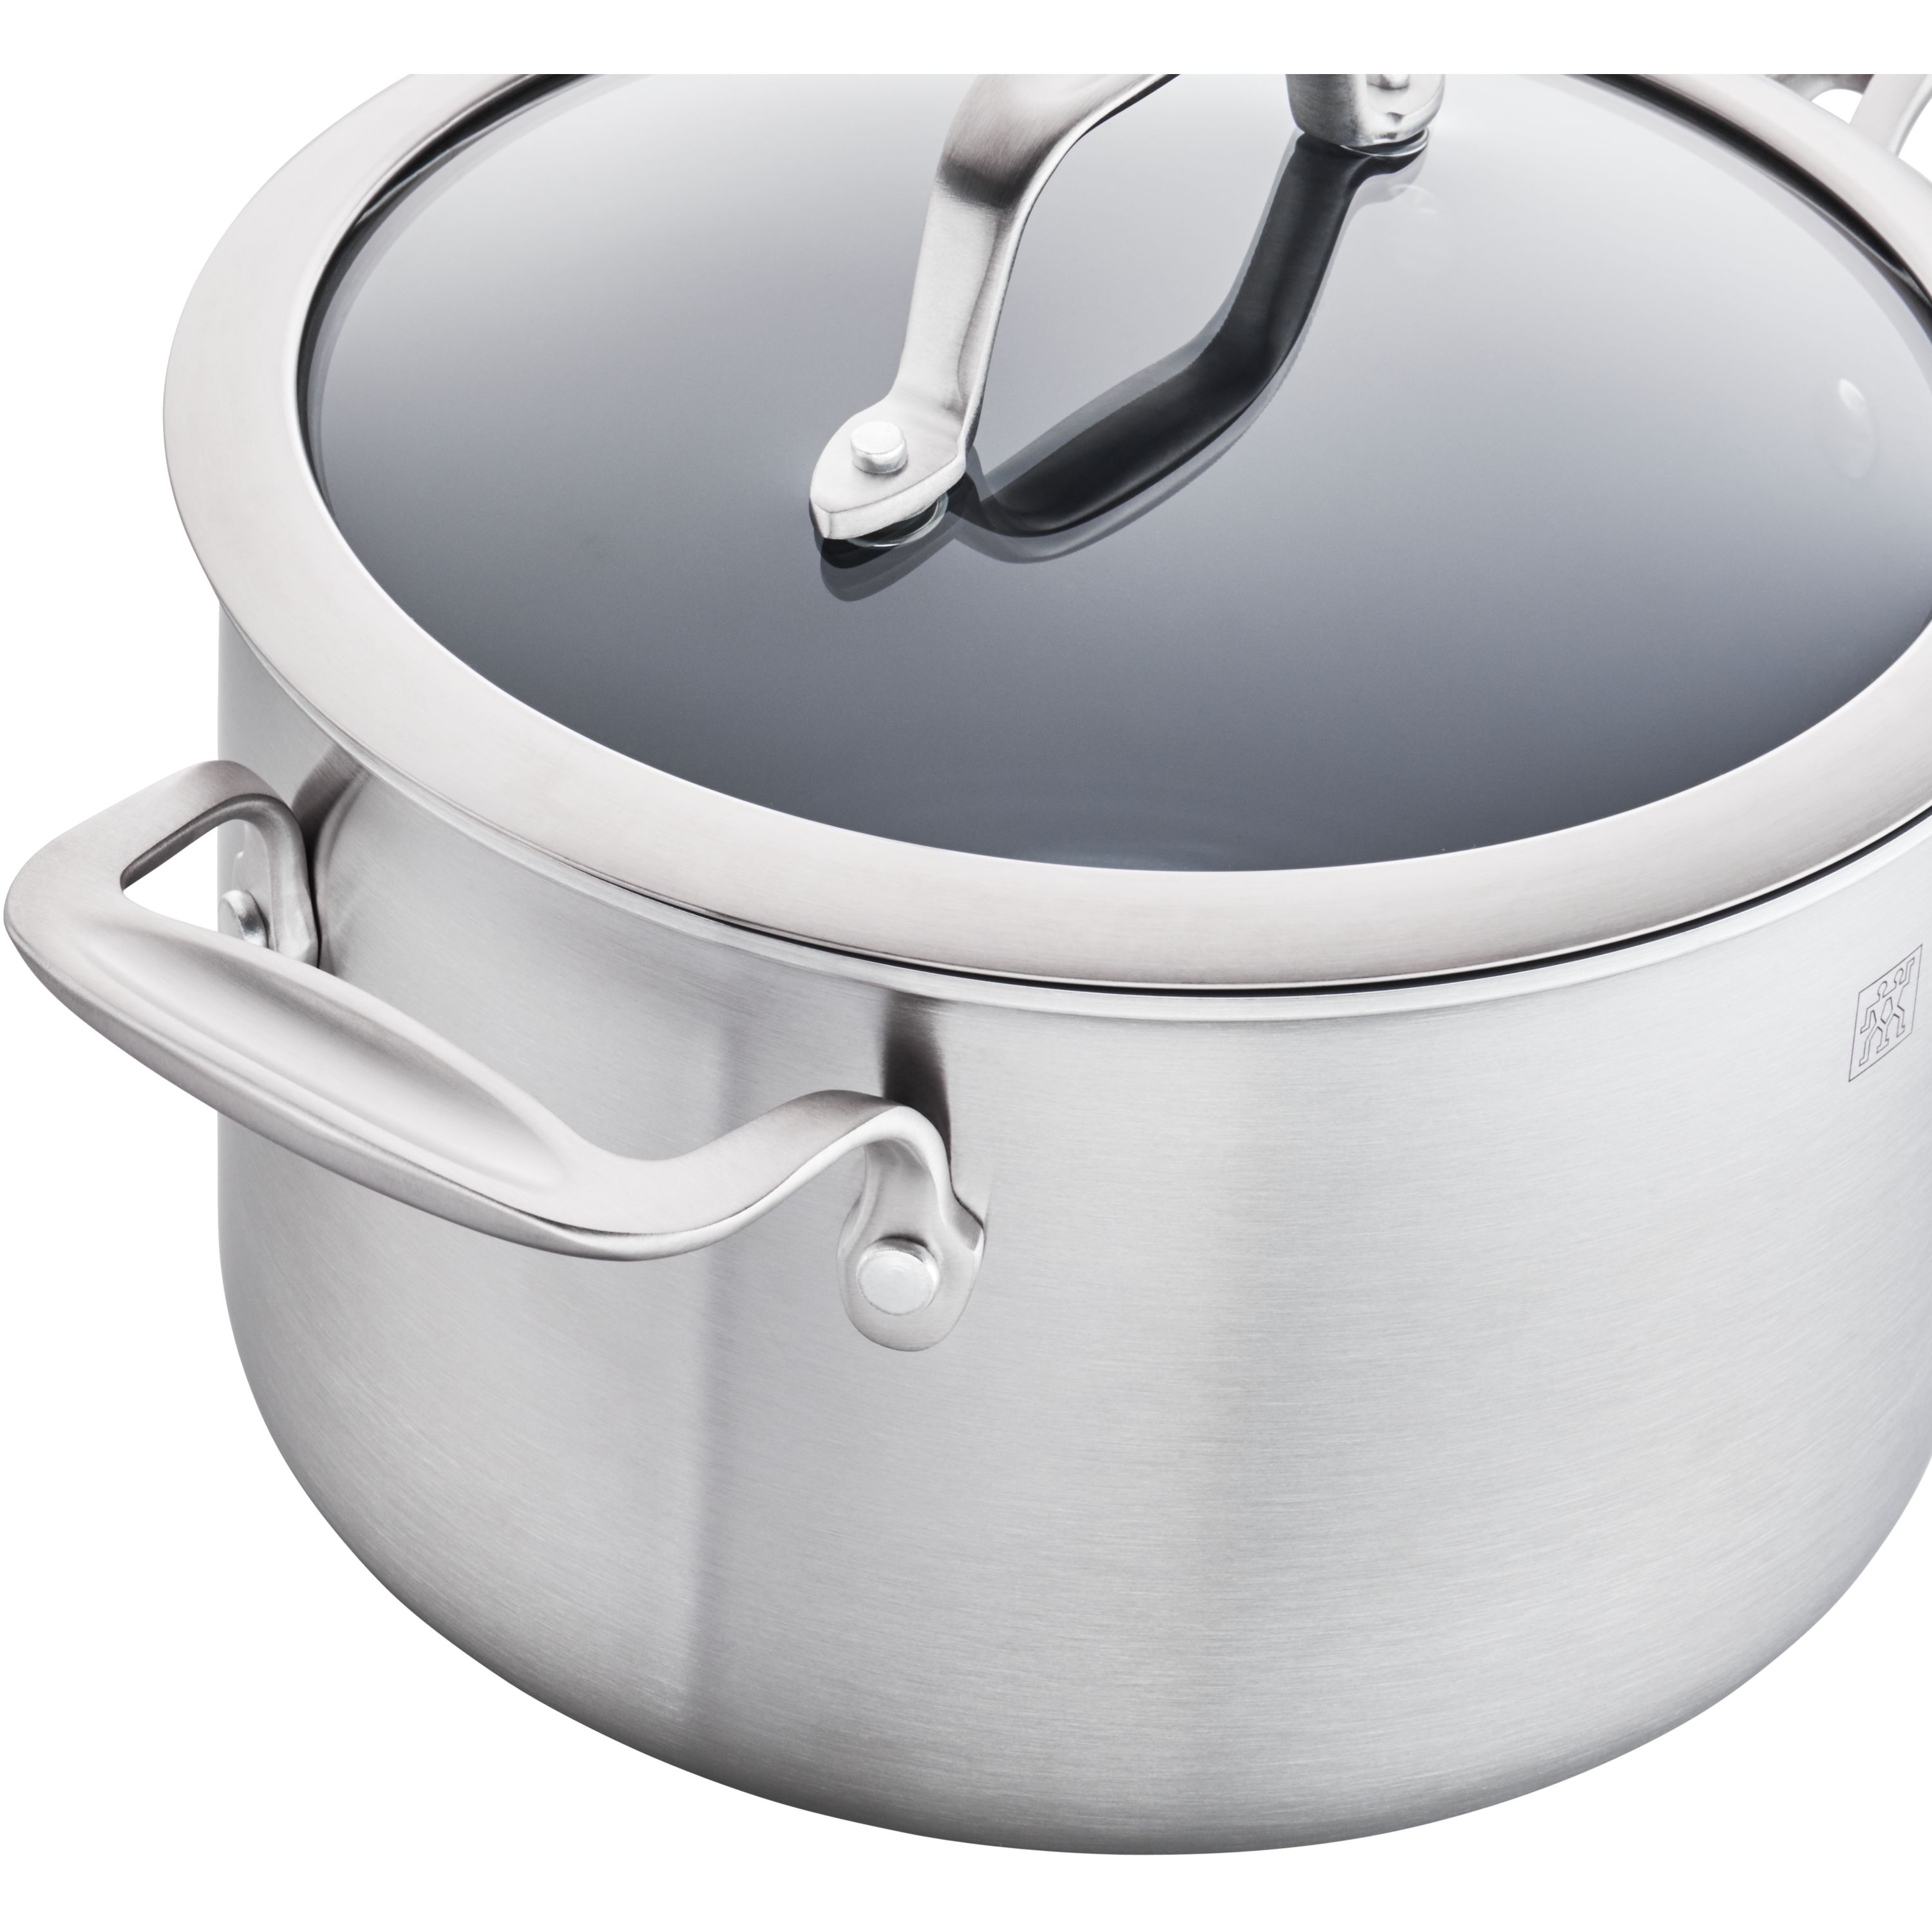  Zwilling Spirit Ceramic Nonstick Saucepan, 3-qt, Stainless  Steel: Sauce Pot: Home & Kitchen